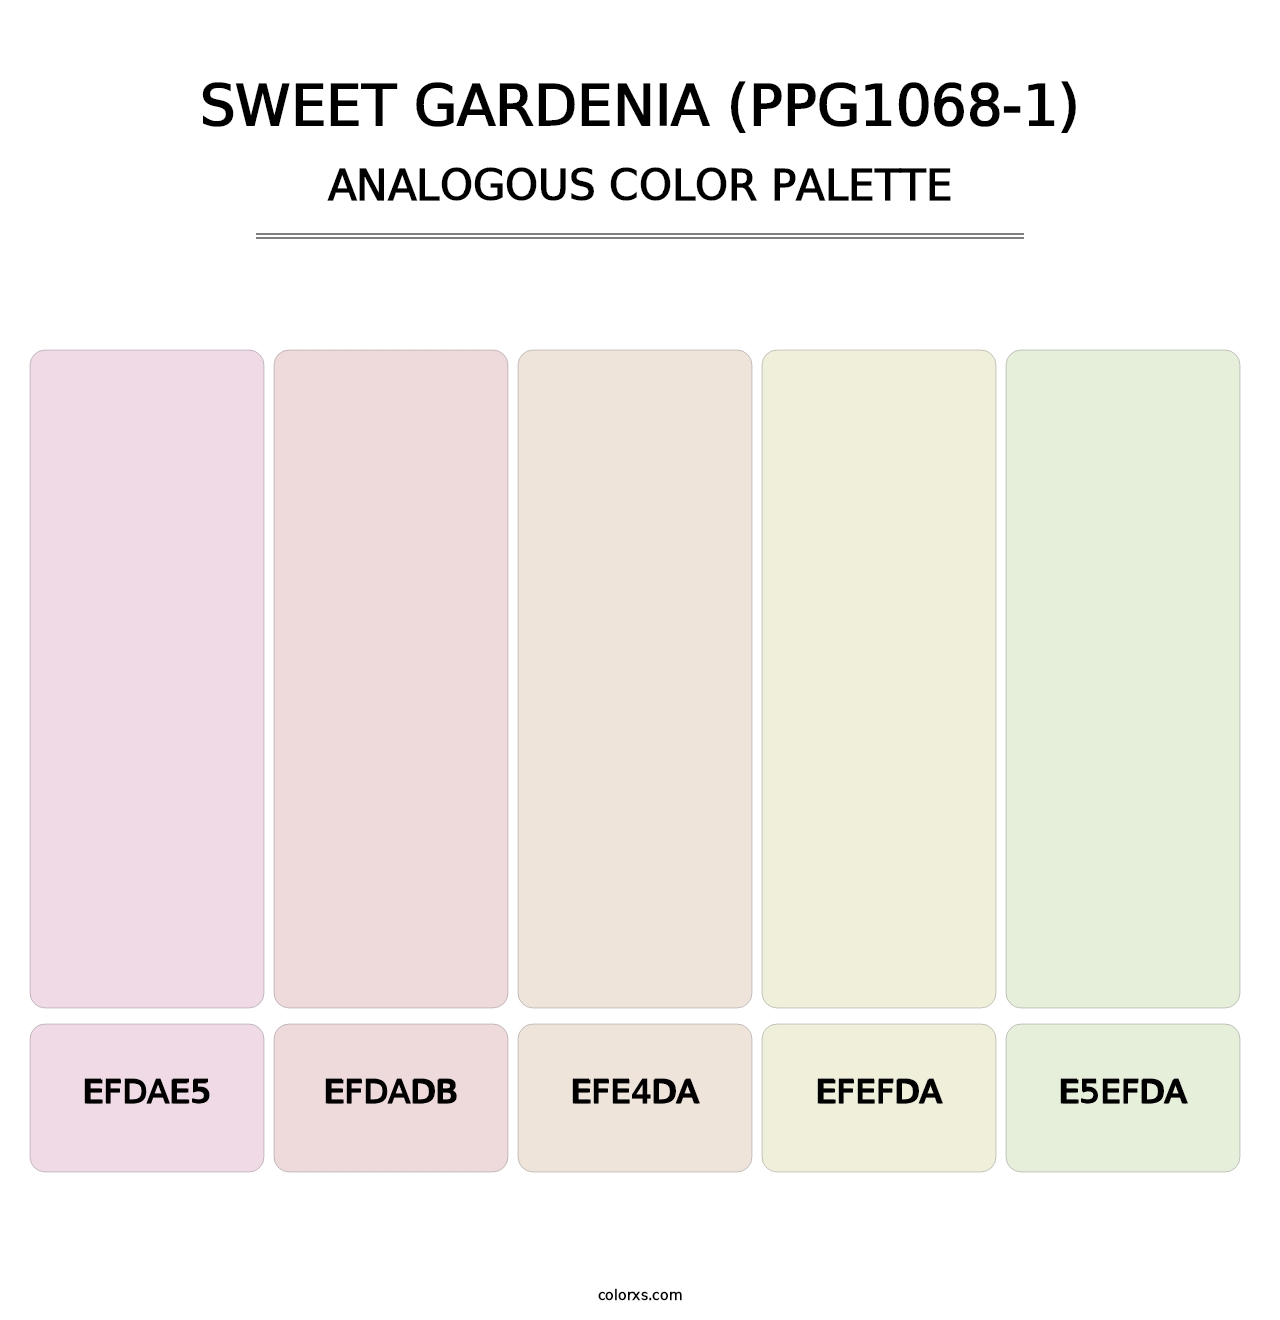 Sweet Gardenia (PPG1068-1) - Analogous Color Palette